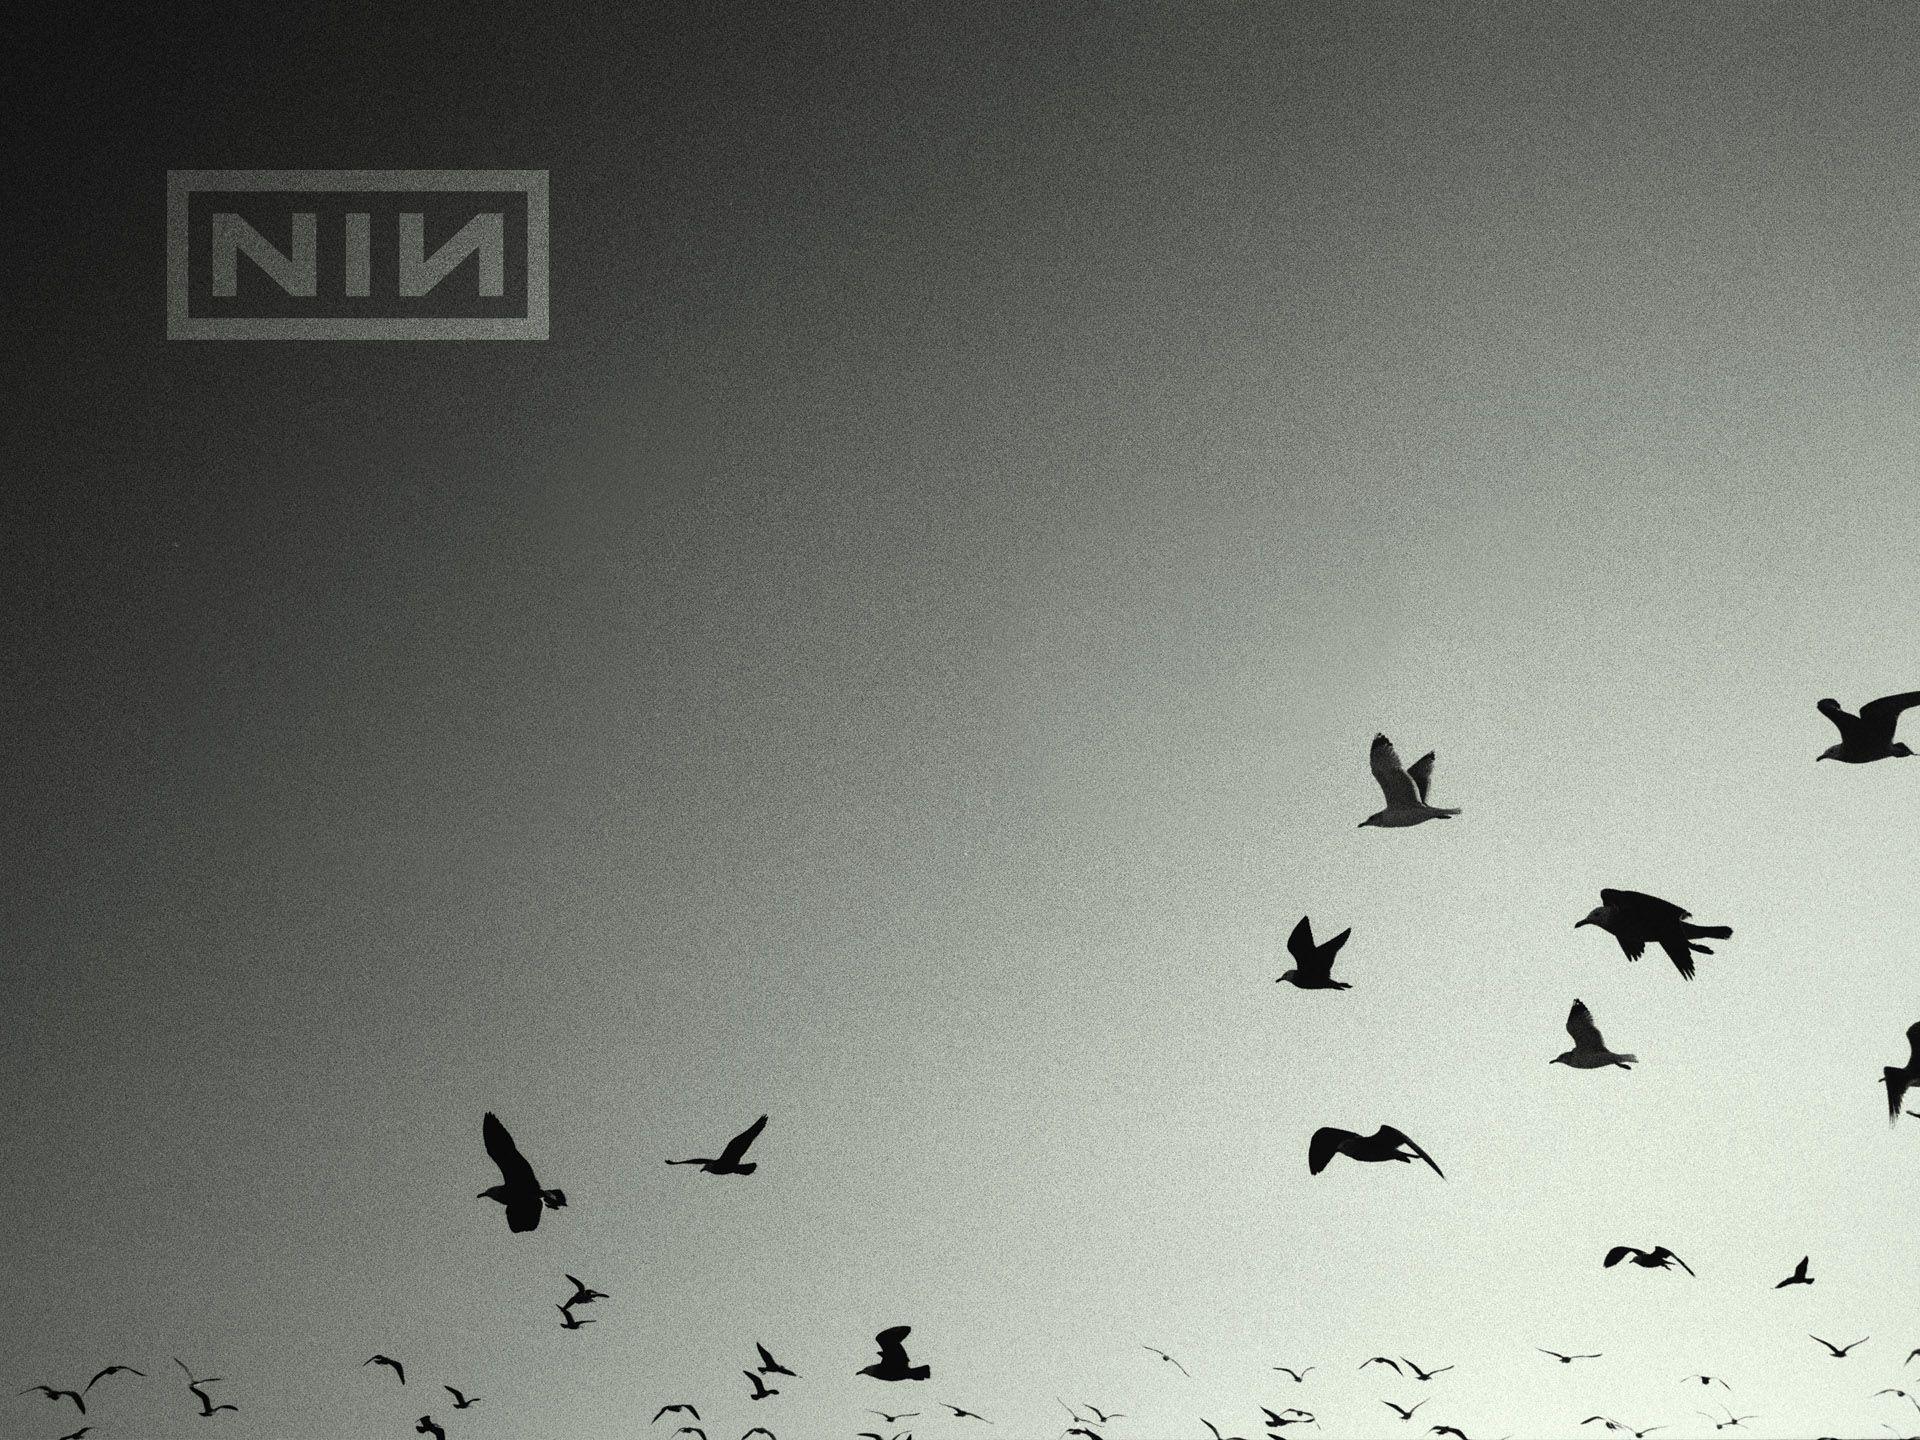 Nine Inch Nails Wallpaper. Nine Inch Nails Background